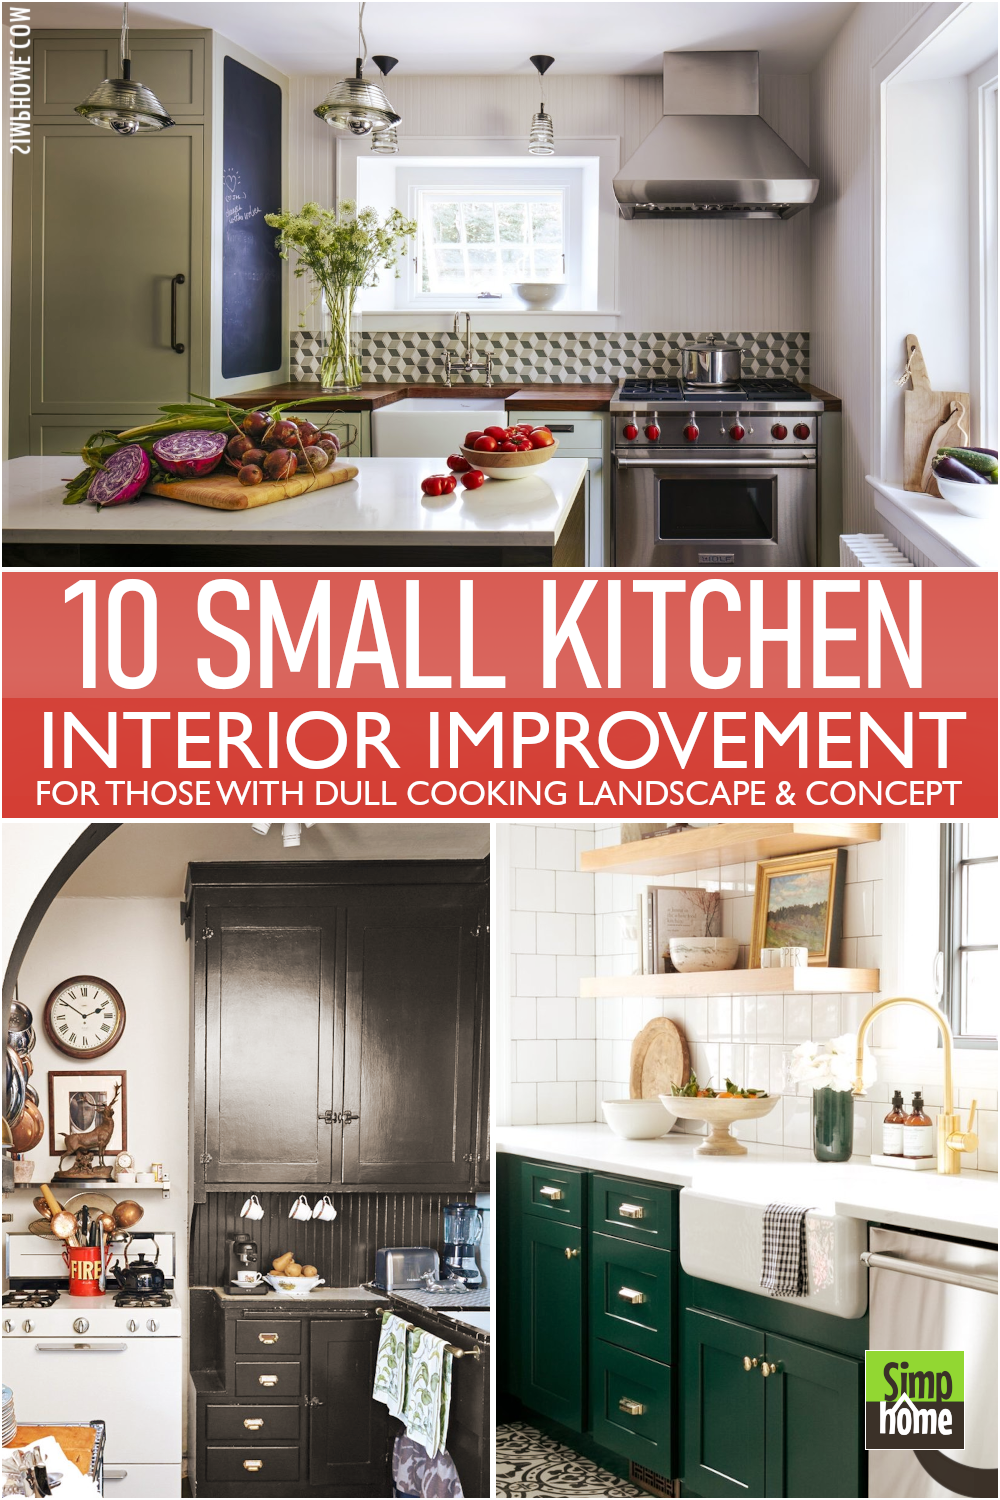 10 Small Kitchen Interior Improvement